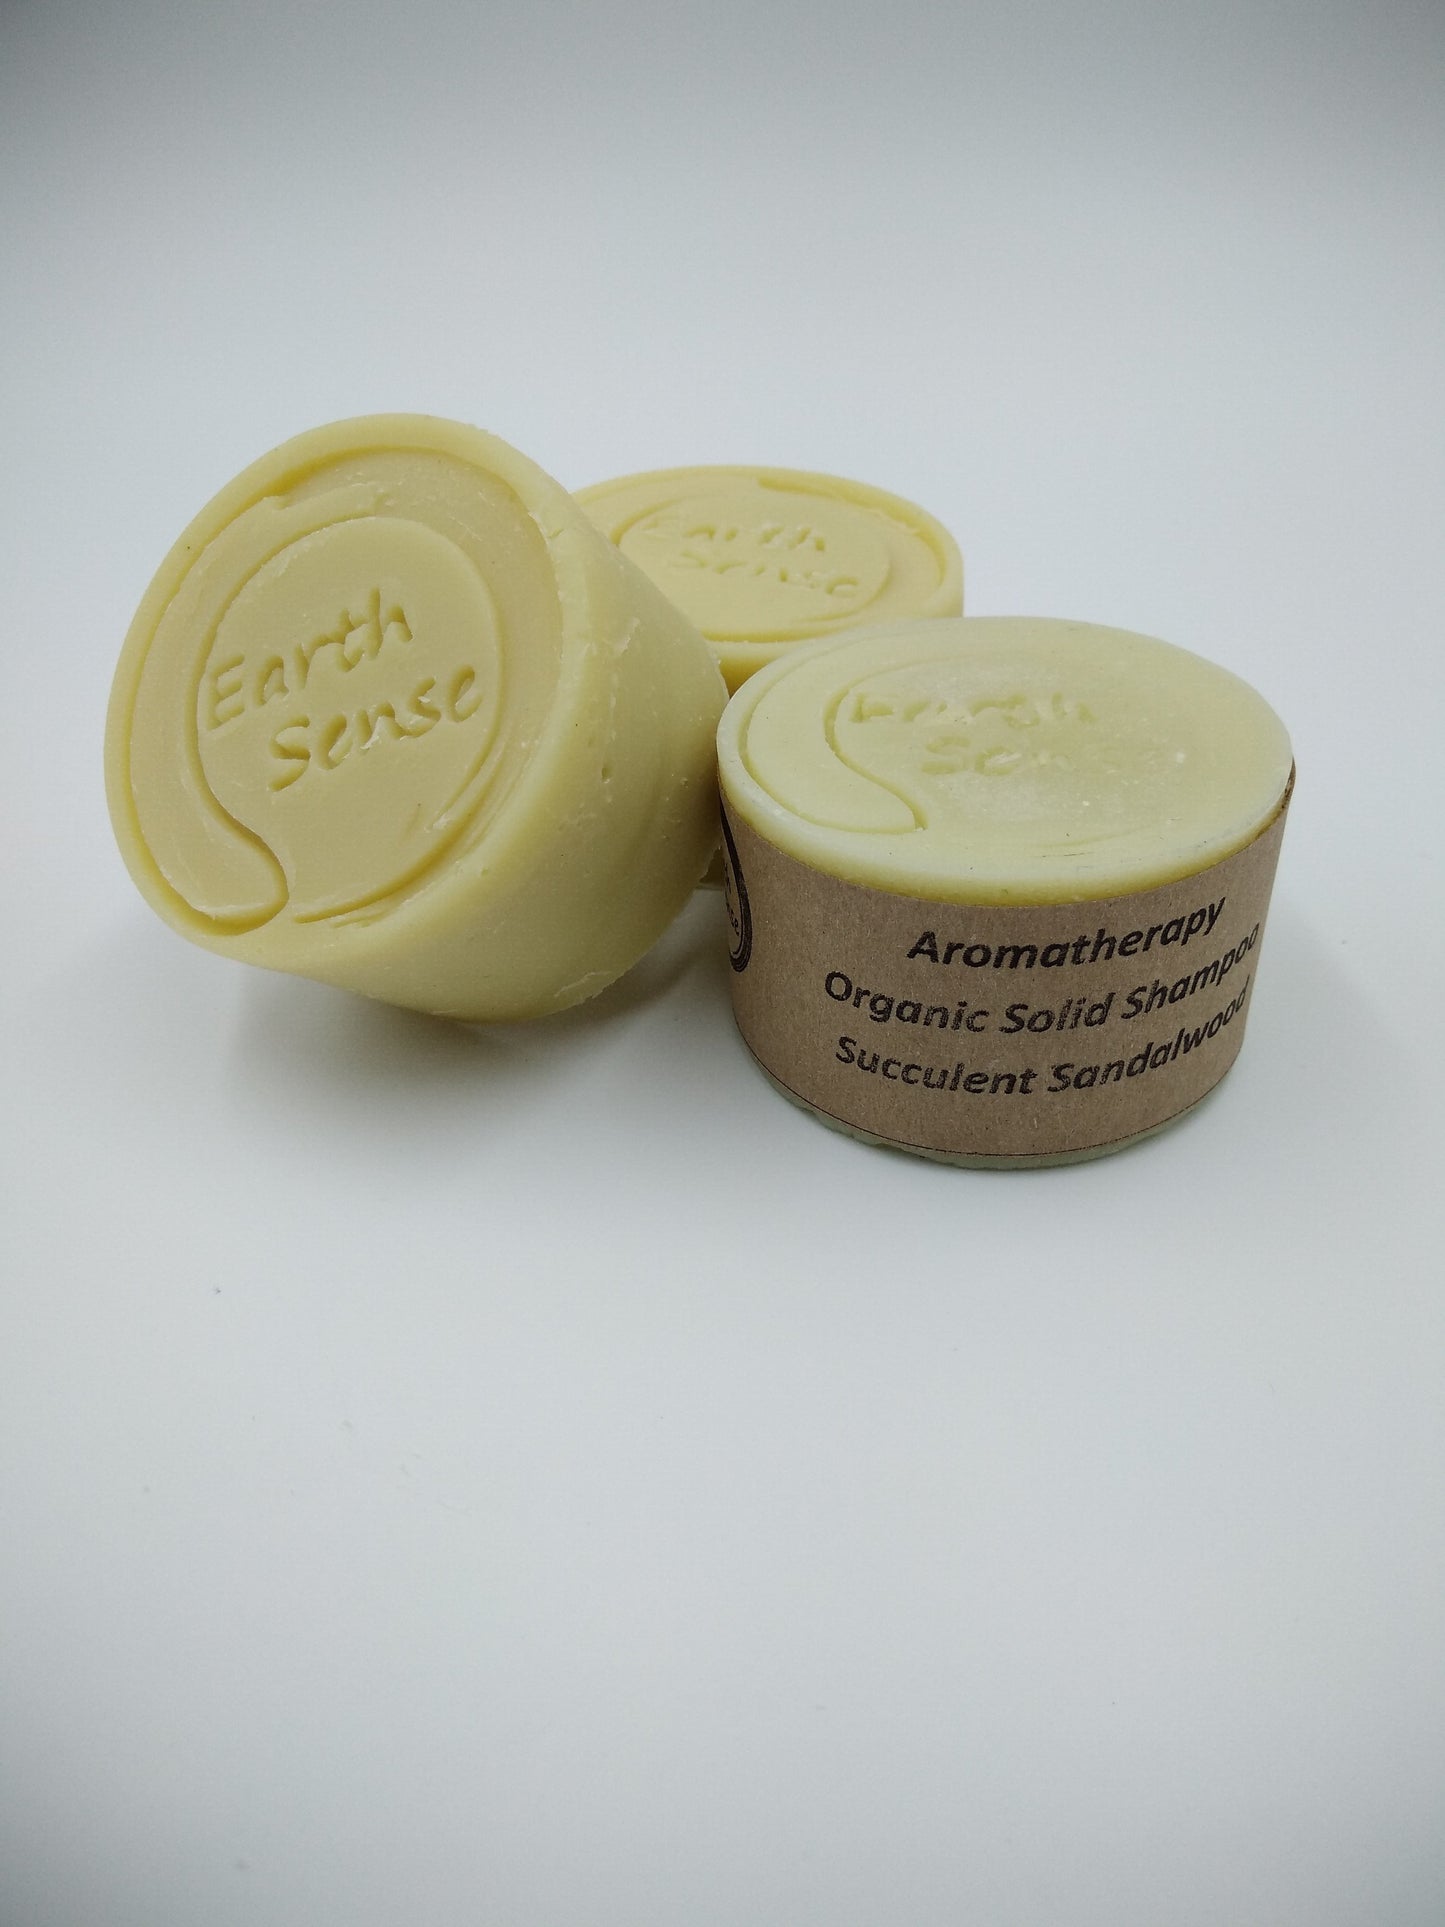 MINI BUNDLE - 4 x 60g Organic Certified Solid Shampoo - Sandalwood - Normal & all Hair Types - Earthsenseorganics